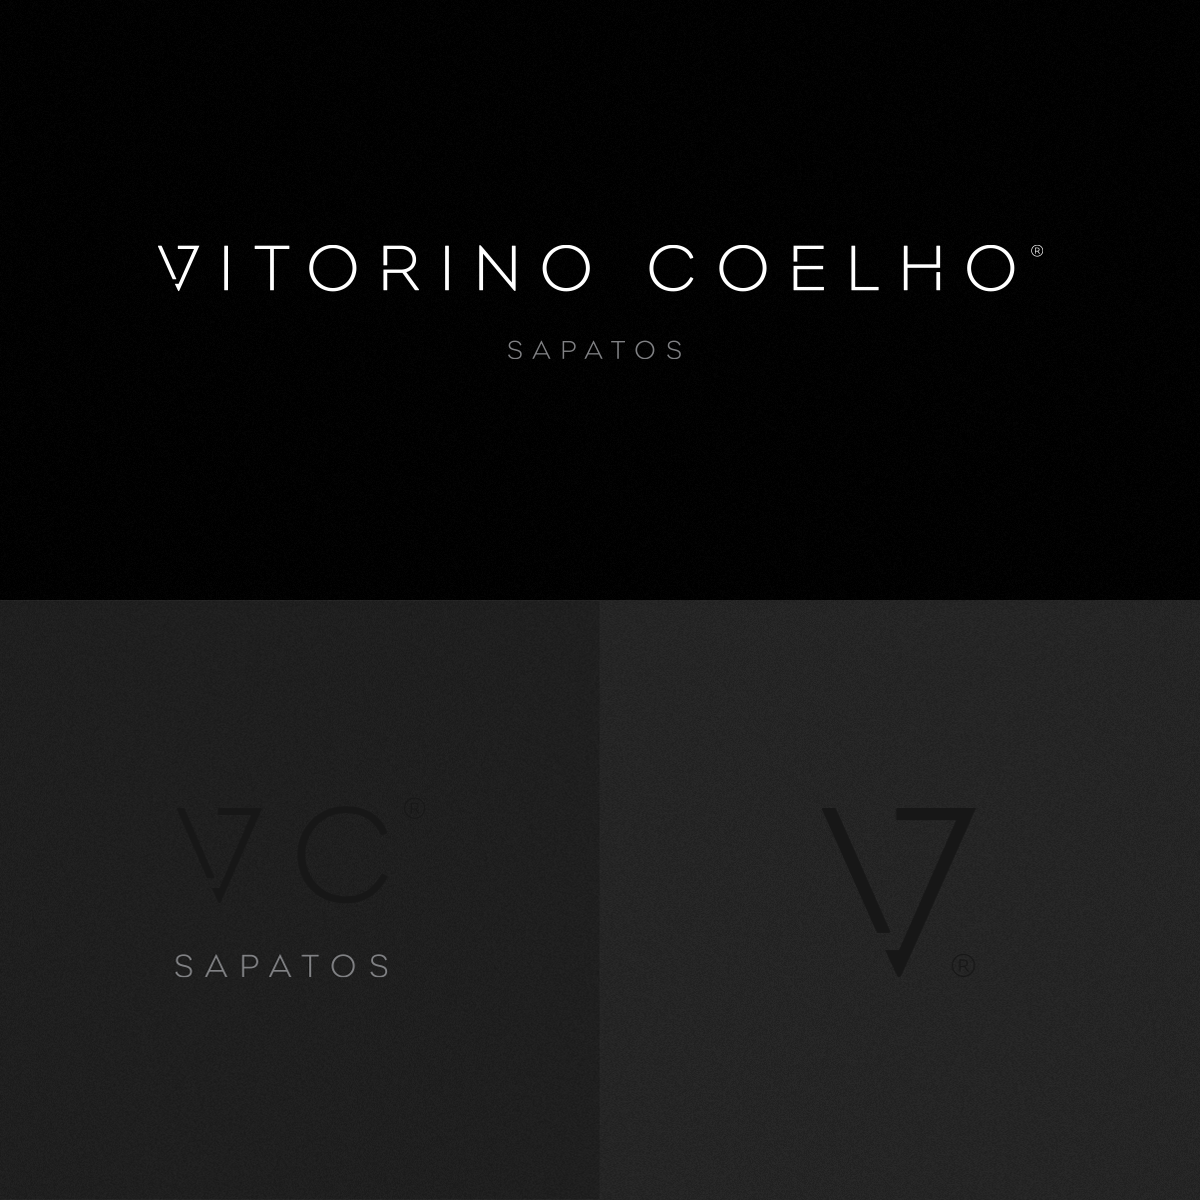 vc shoes Sapatos Portugal brand premium Classic luxury type logo Typeface leather Vitorino coelho vitorino coelho